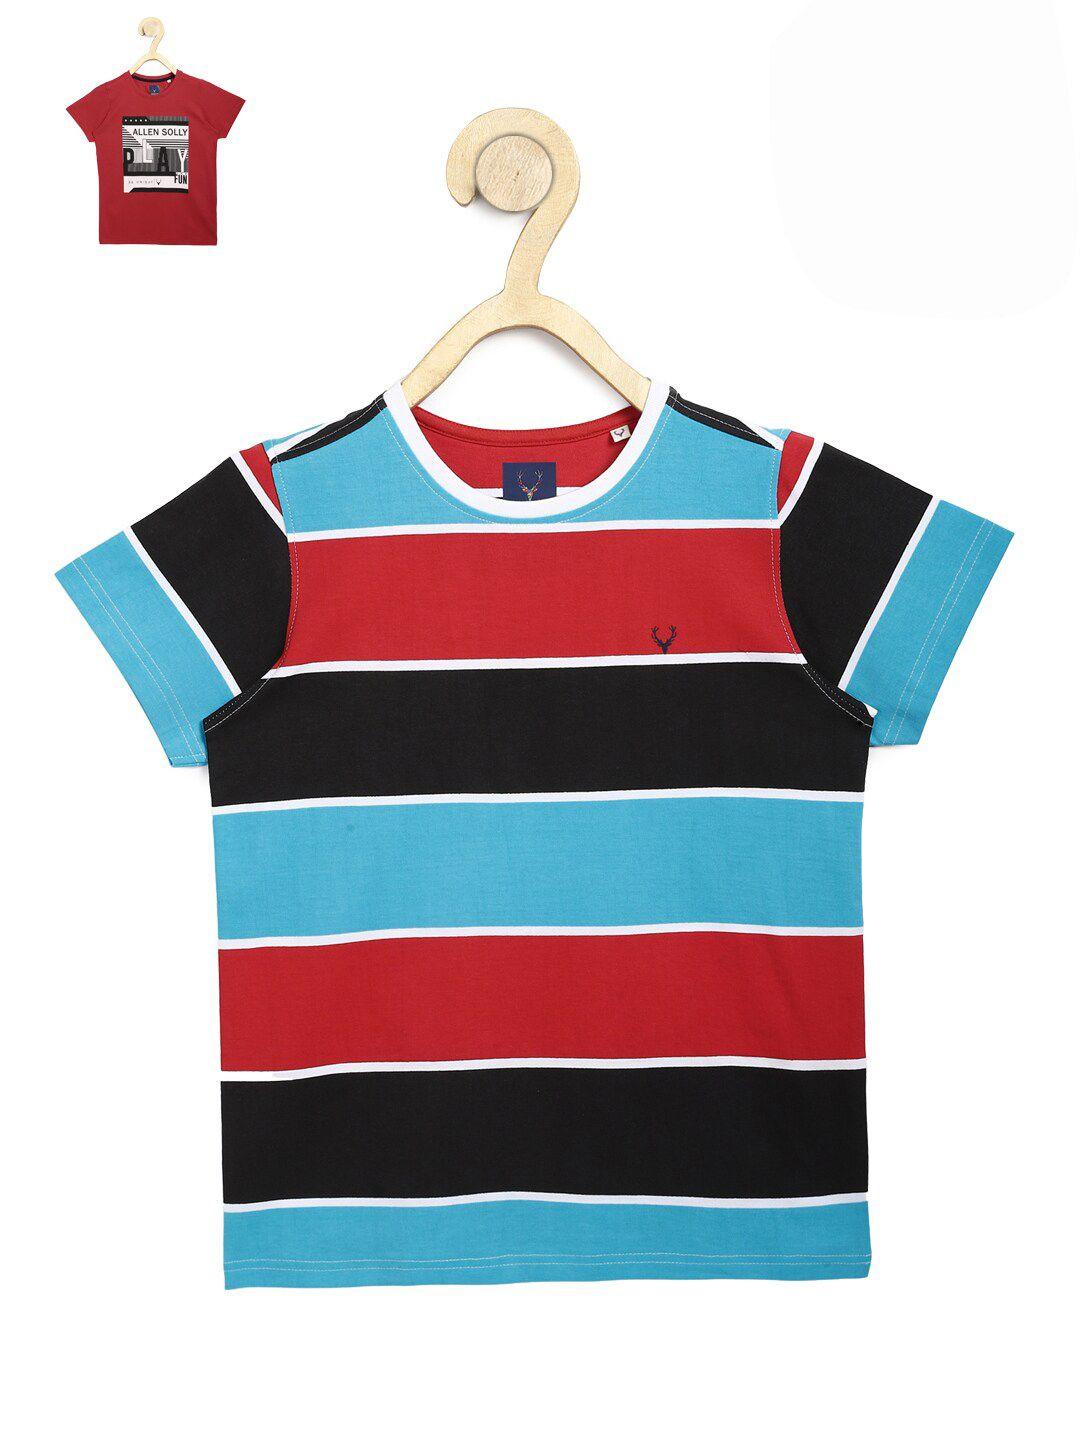 allen solly junior boys maroon & blue set of 2 striped cotton t-shirt